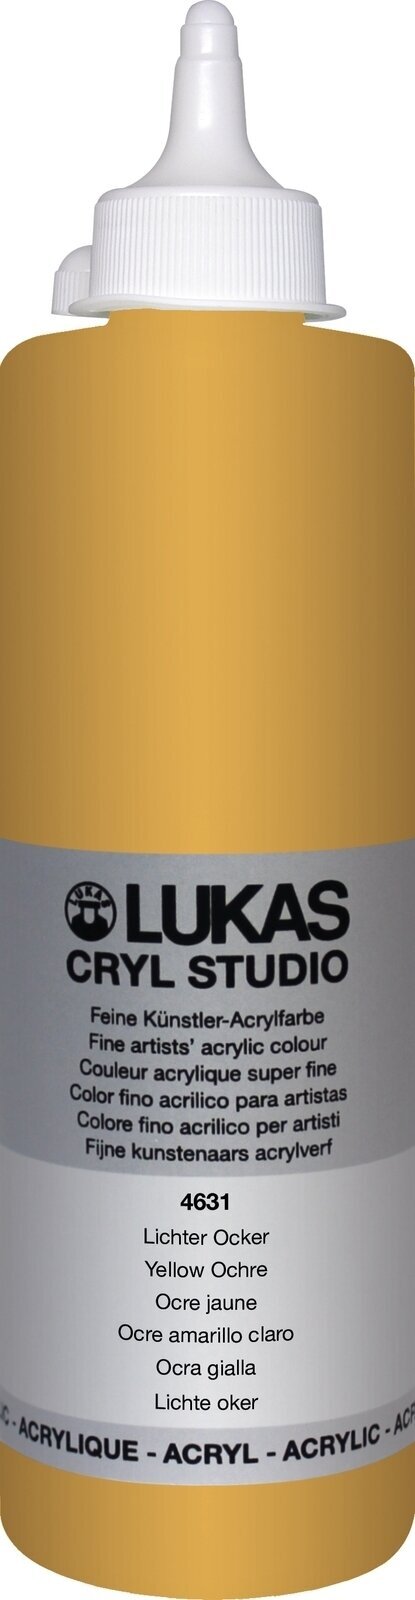 Acrylic Paint Lukas Cryl Studio Acrylic Paint Plastic Bottle Acrylic Paint Yellow Ochre 500 ml 1 pc